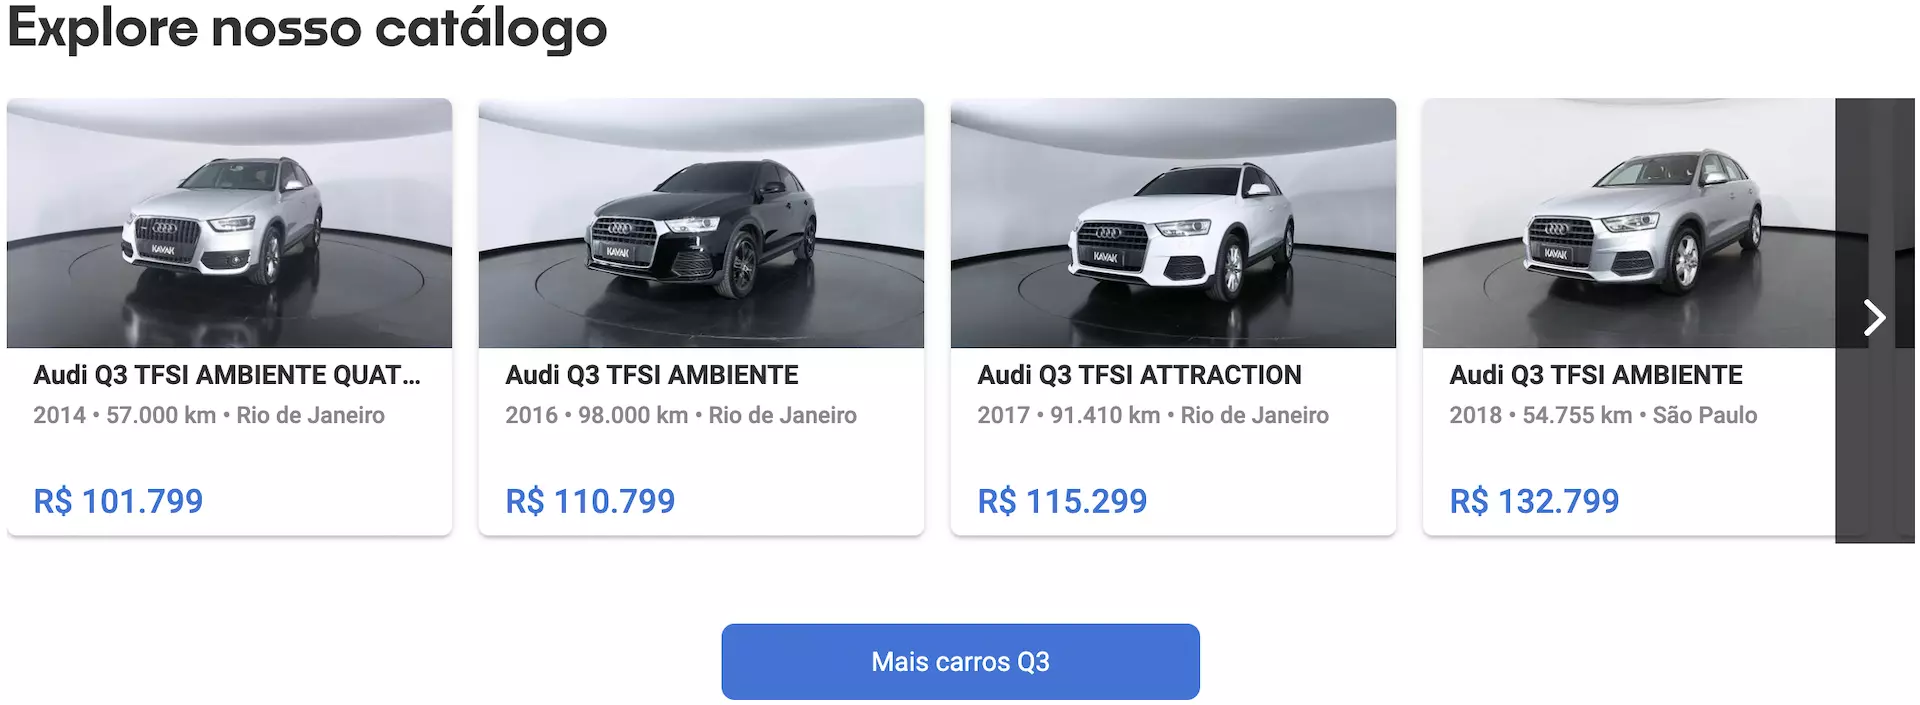 Audi Q3 preço